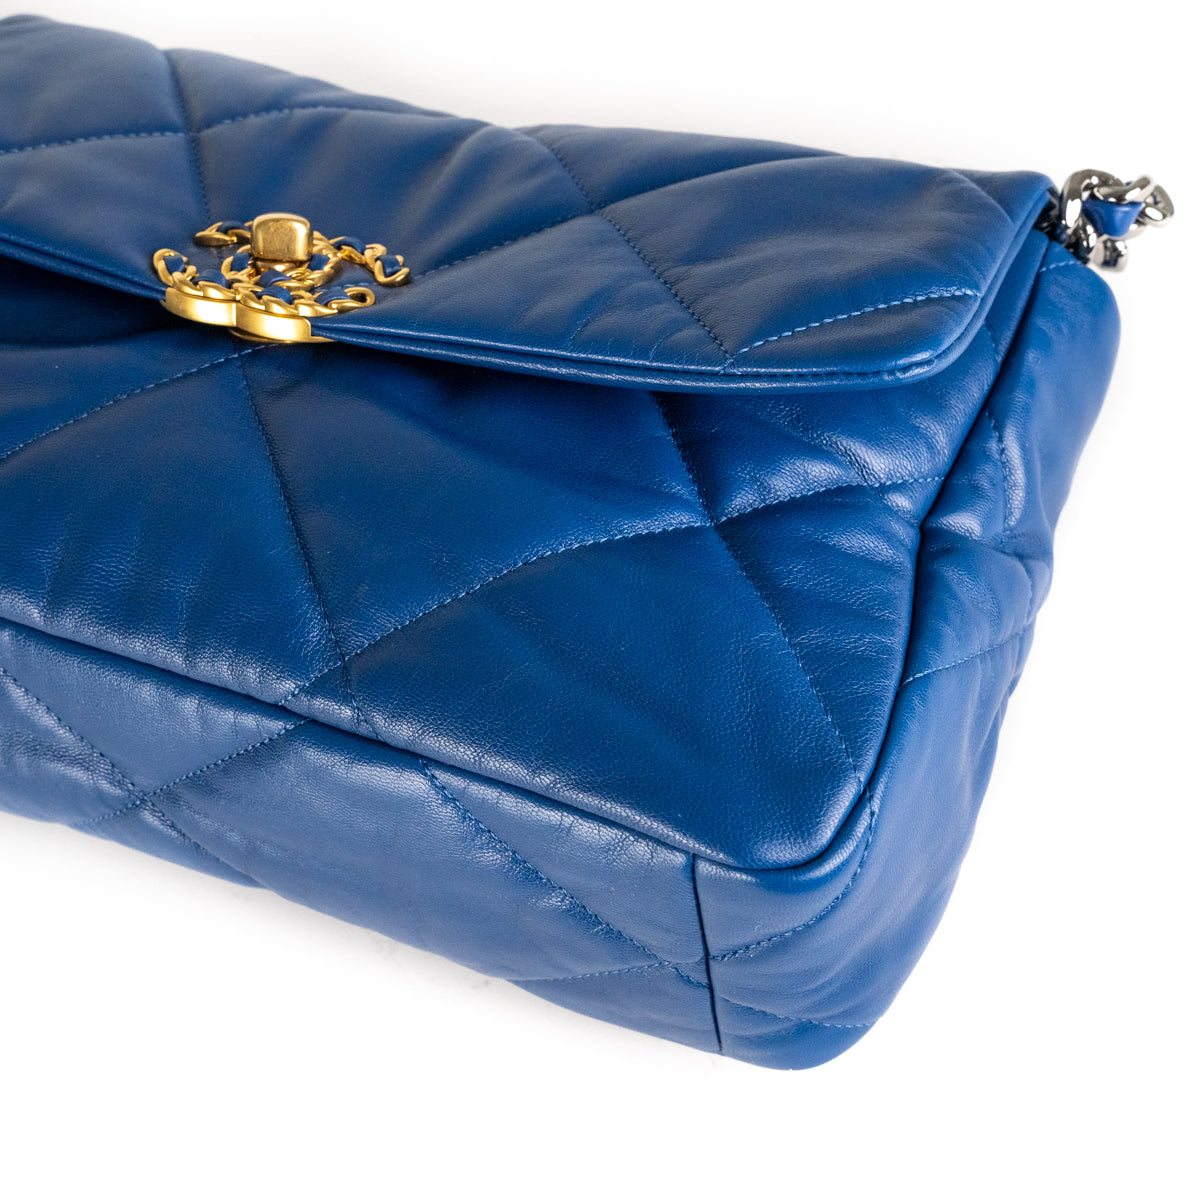 Chanel 19 Large Handbag - Fablle